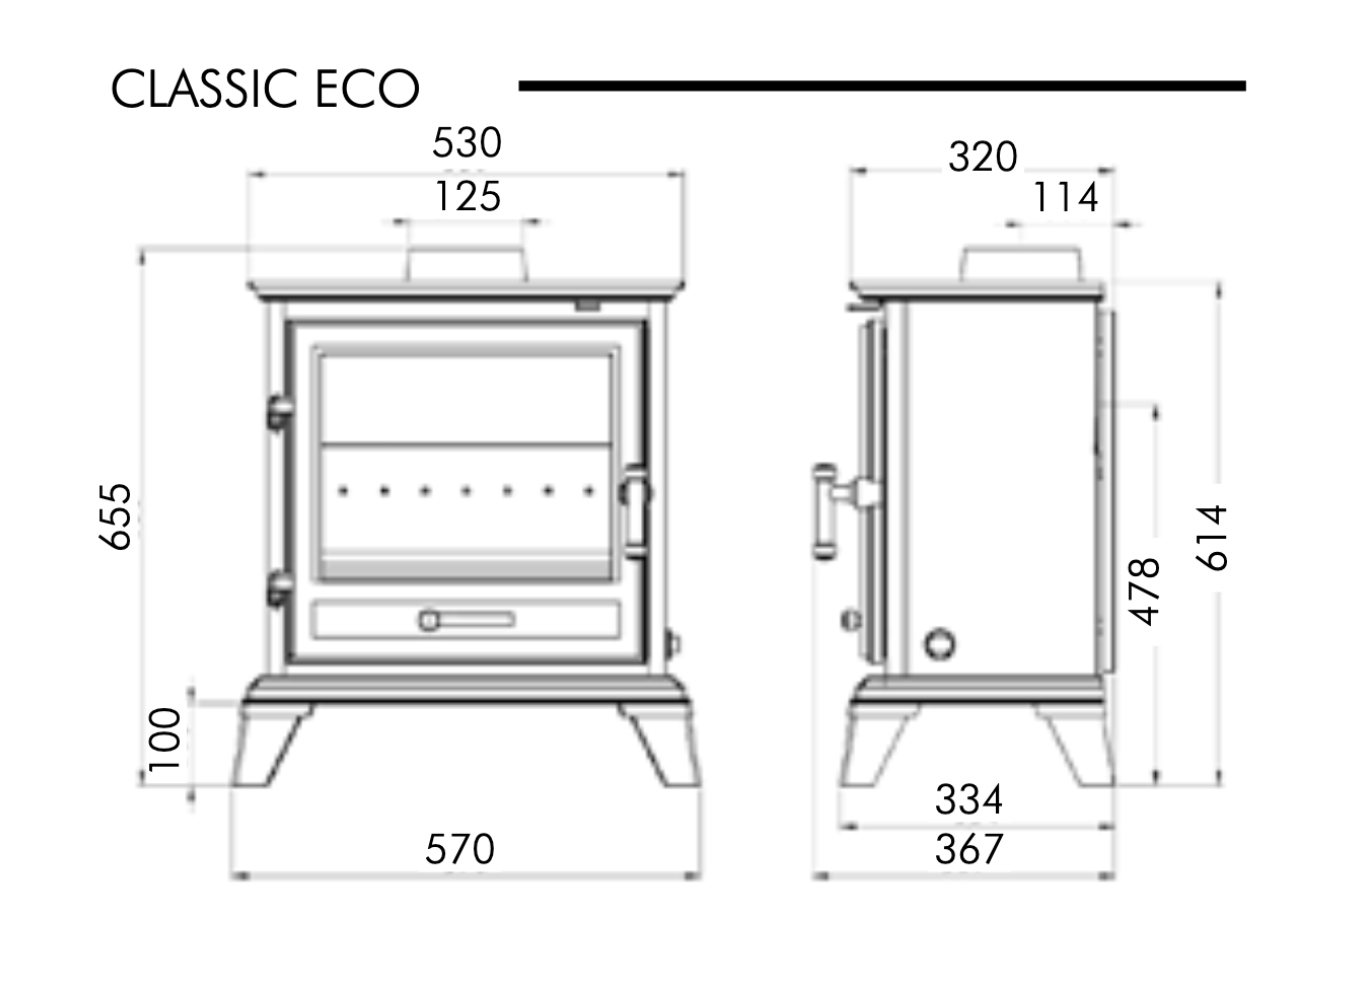 Clasic 8 Eco Stove Dimensions